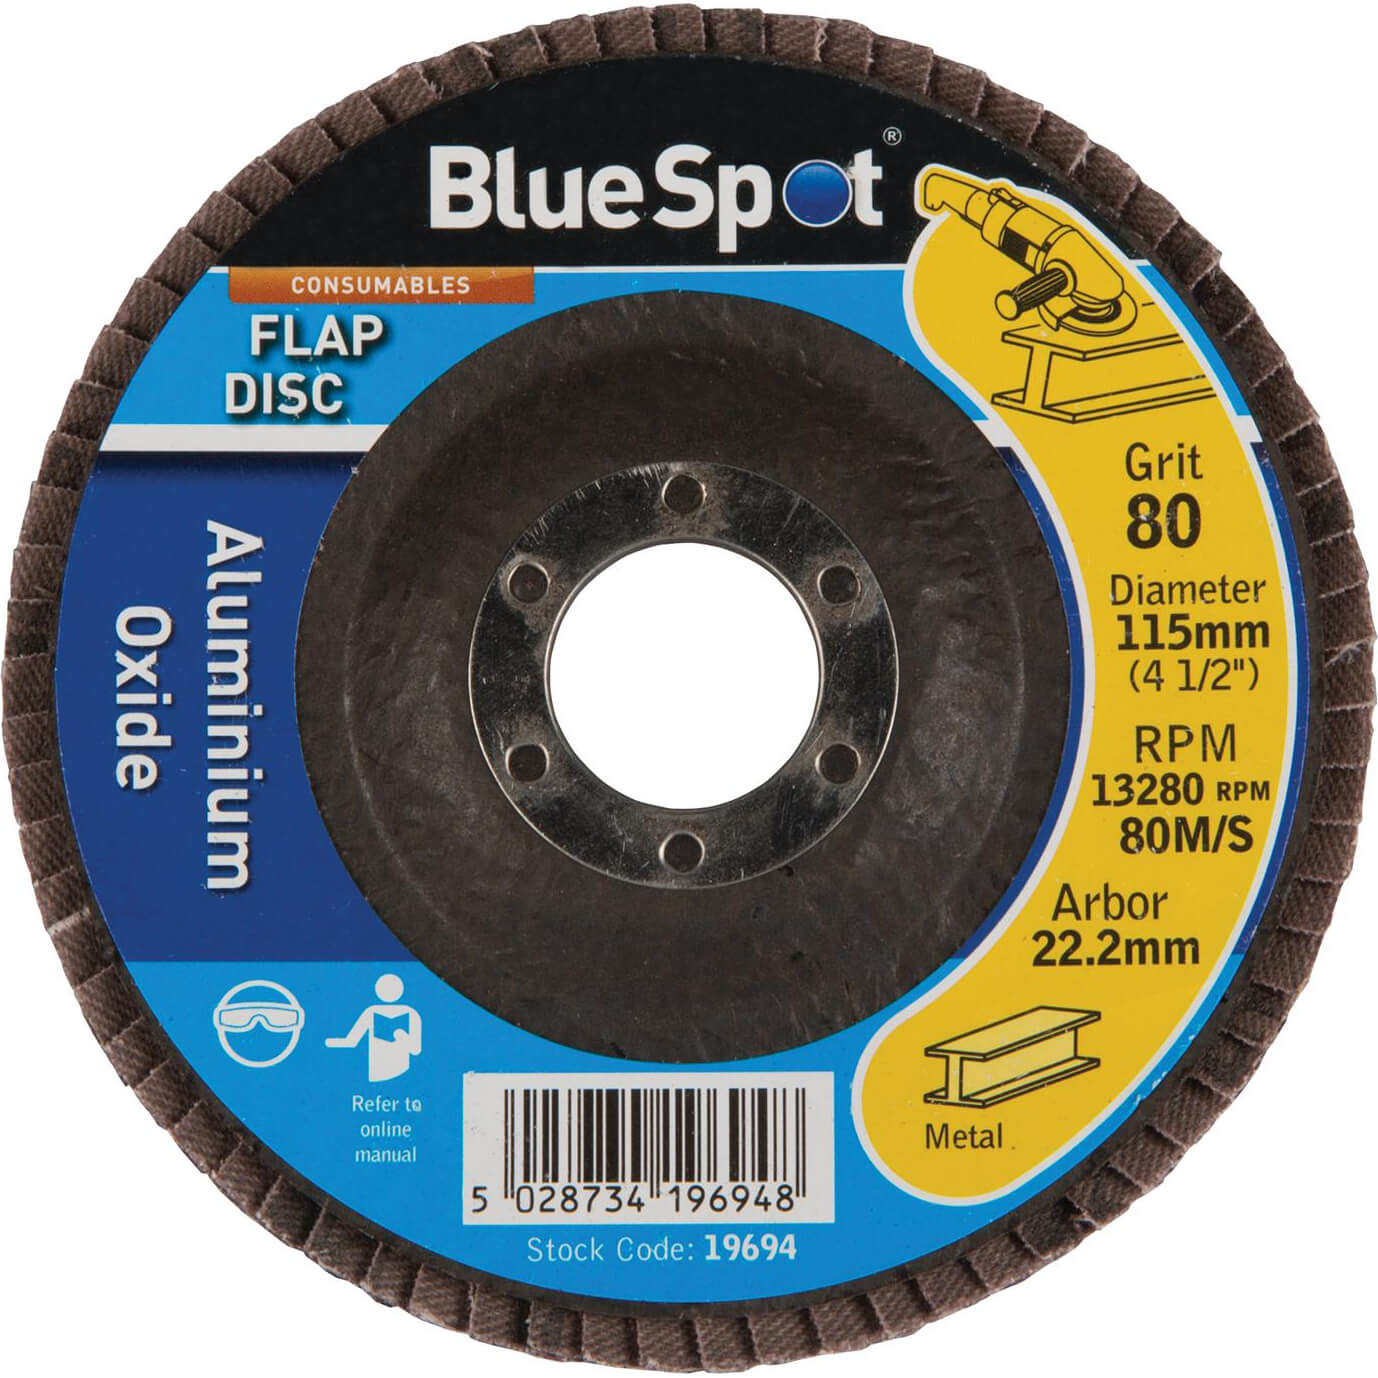 Image of BlueSpot Flap Disc 115mm 115mm 80g